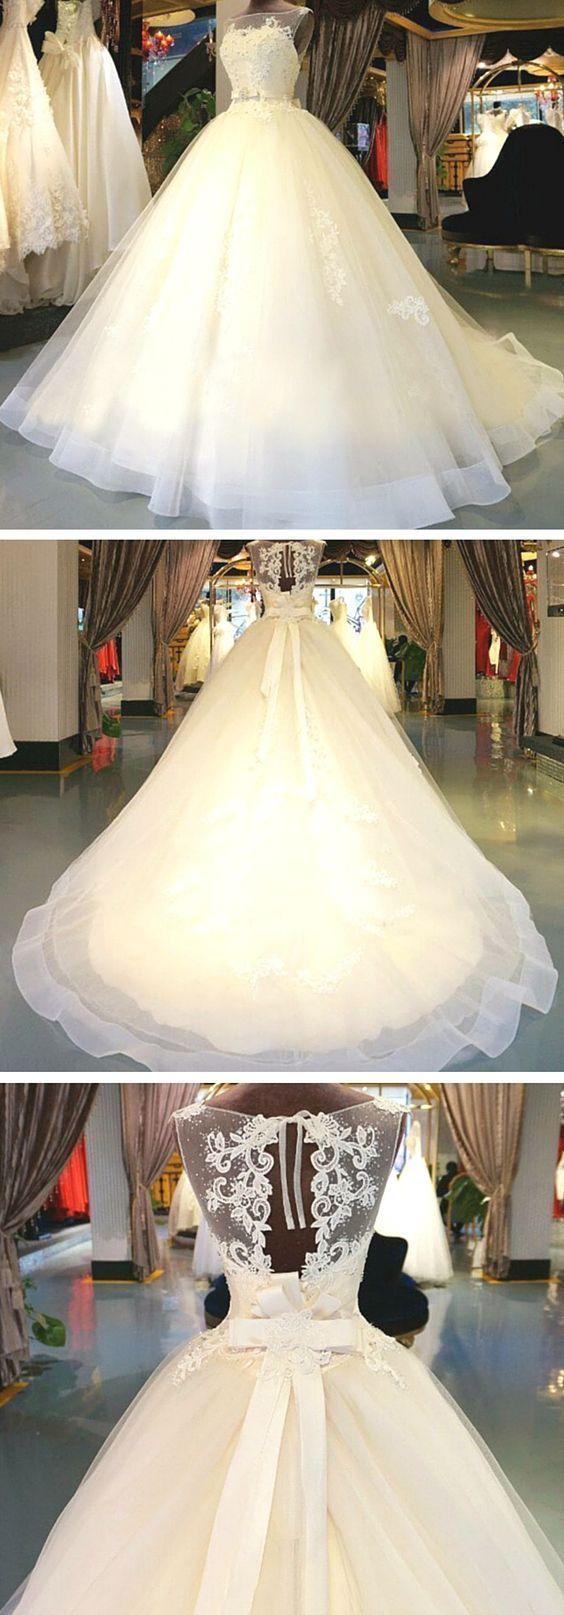 Hochzeit - Princess Ball Gown White Tulle Skirt Lace Bodice Wedding Gowns Wedding Dresses Unique Wedding Dress Bride Gowns